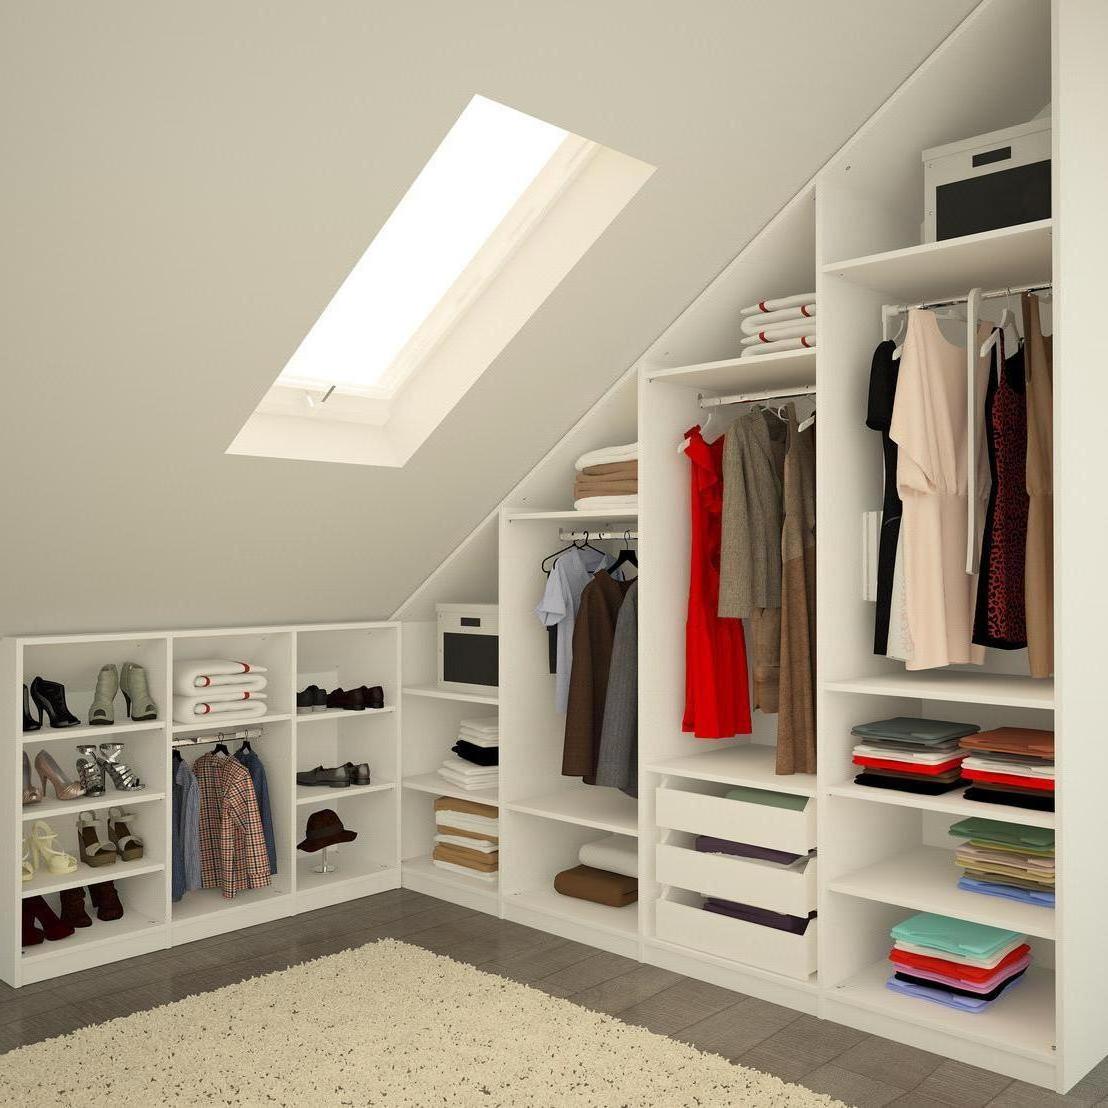 attic bedroom closet ideas photo - 1